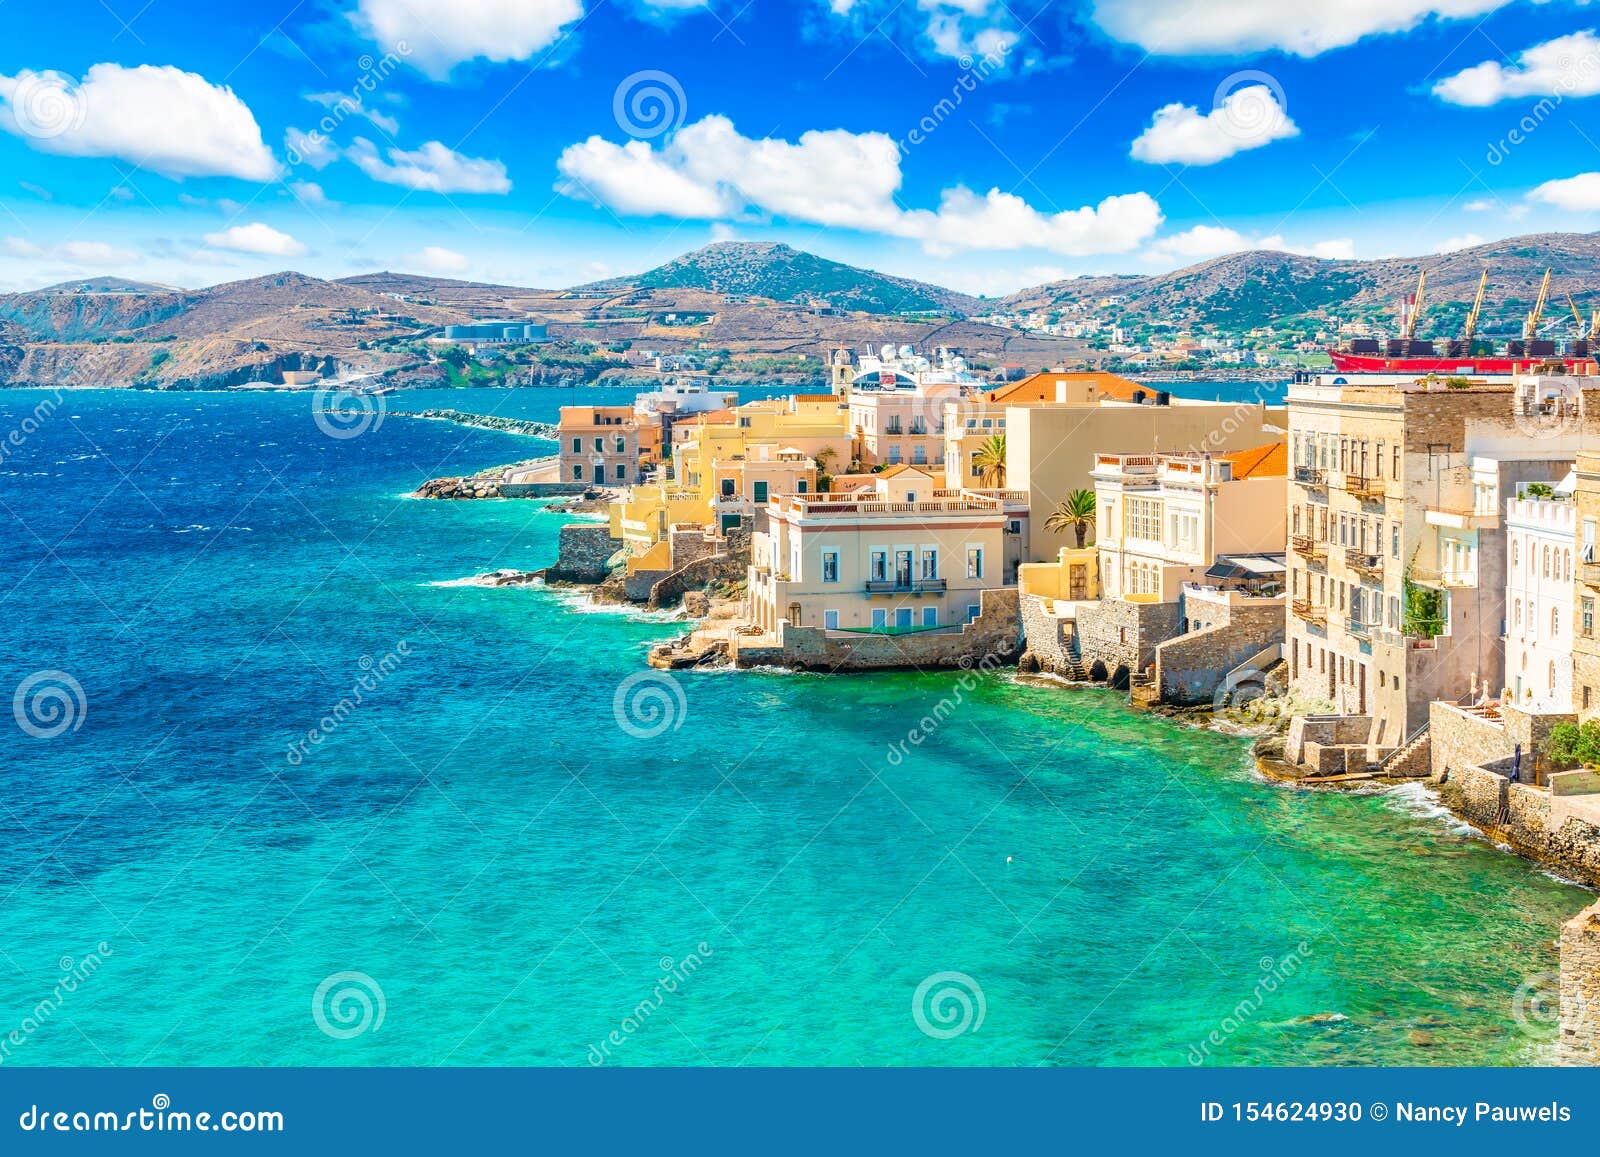 ermoupoli, syros, greece. colorful landscape.